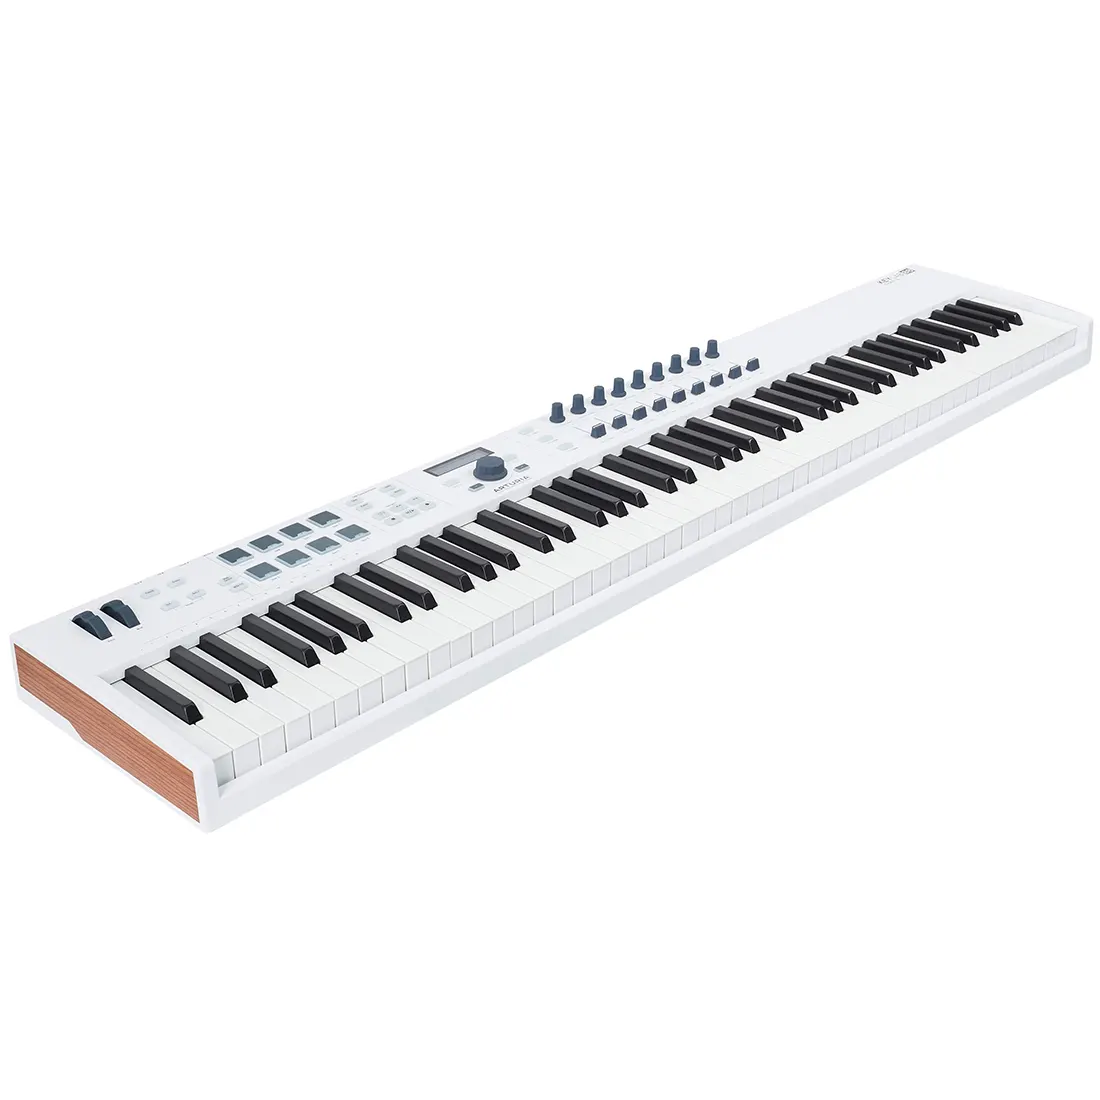 Arturia Keylab Essential 88 MIDI klaviatura